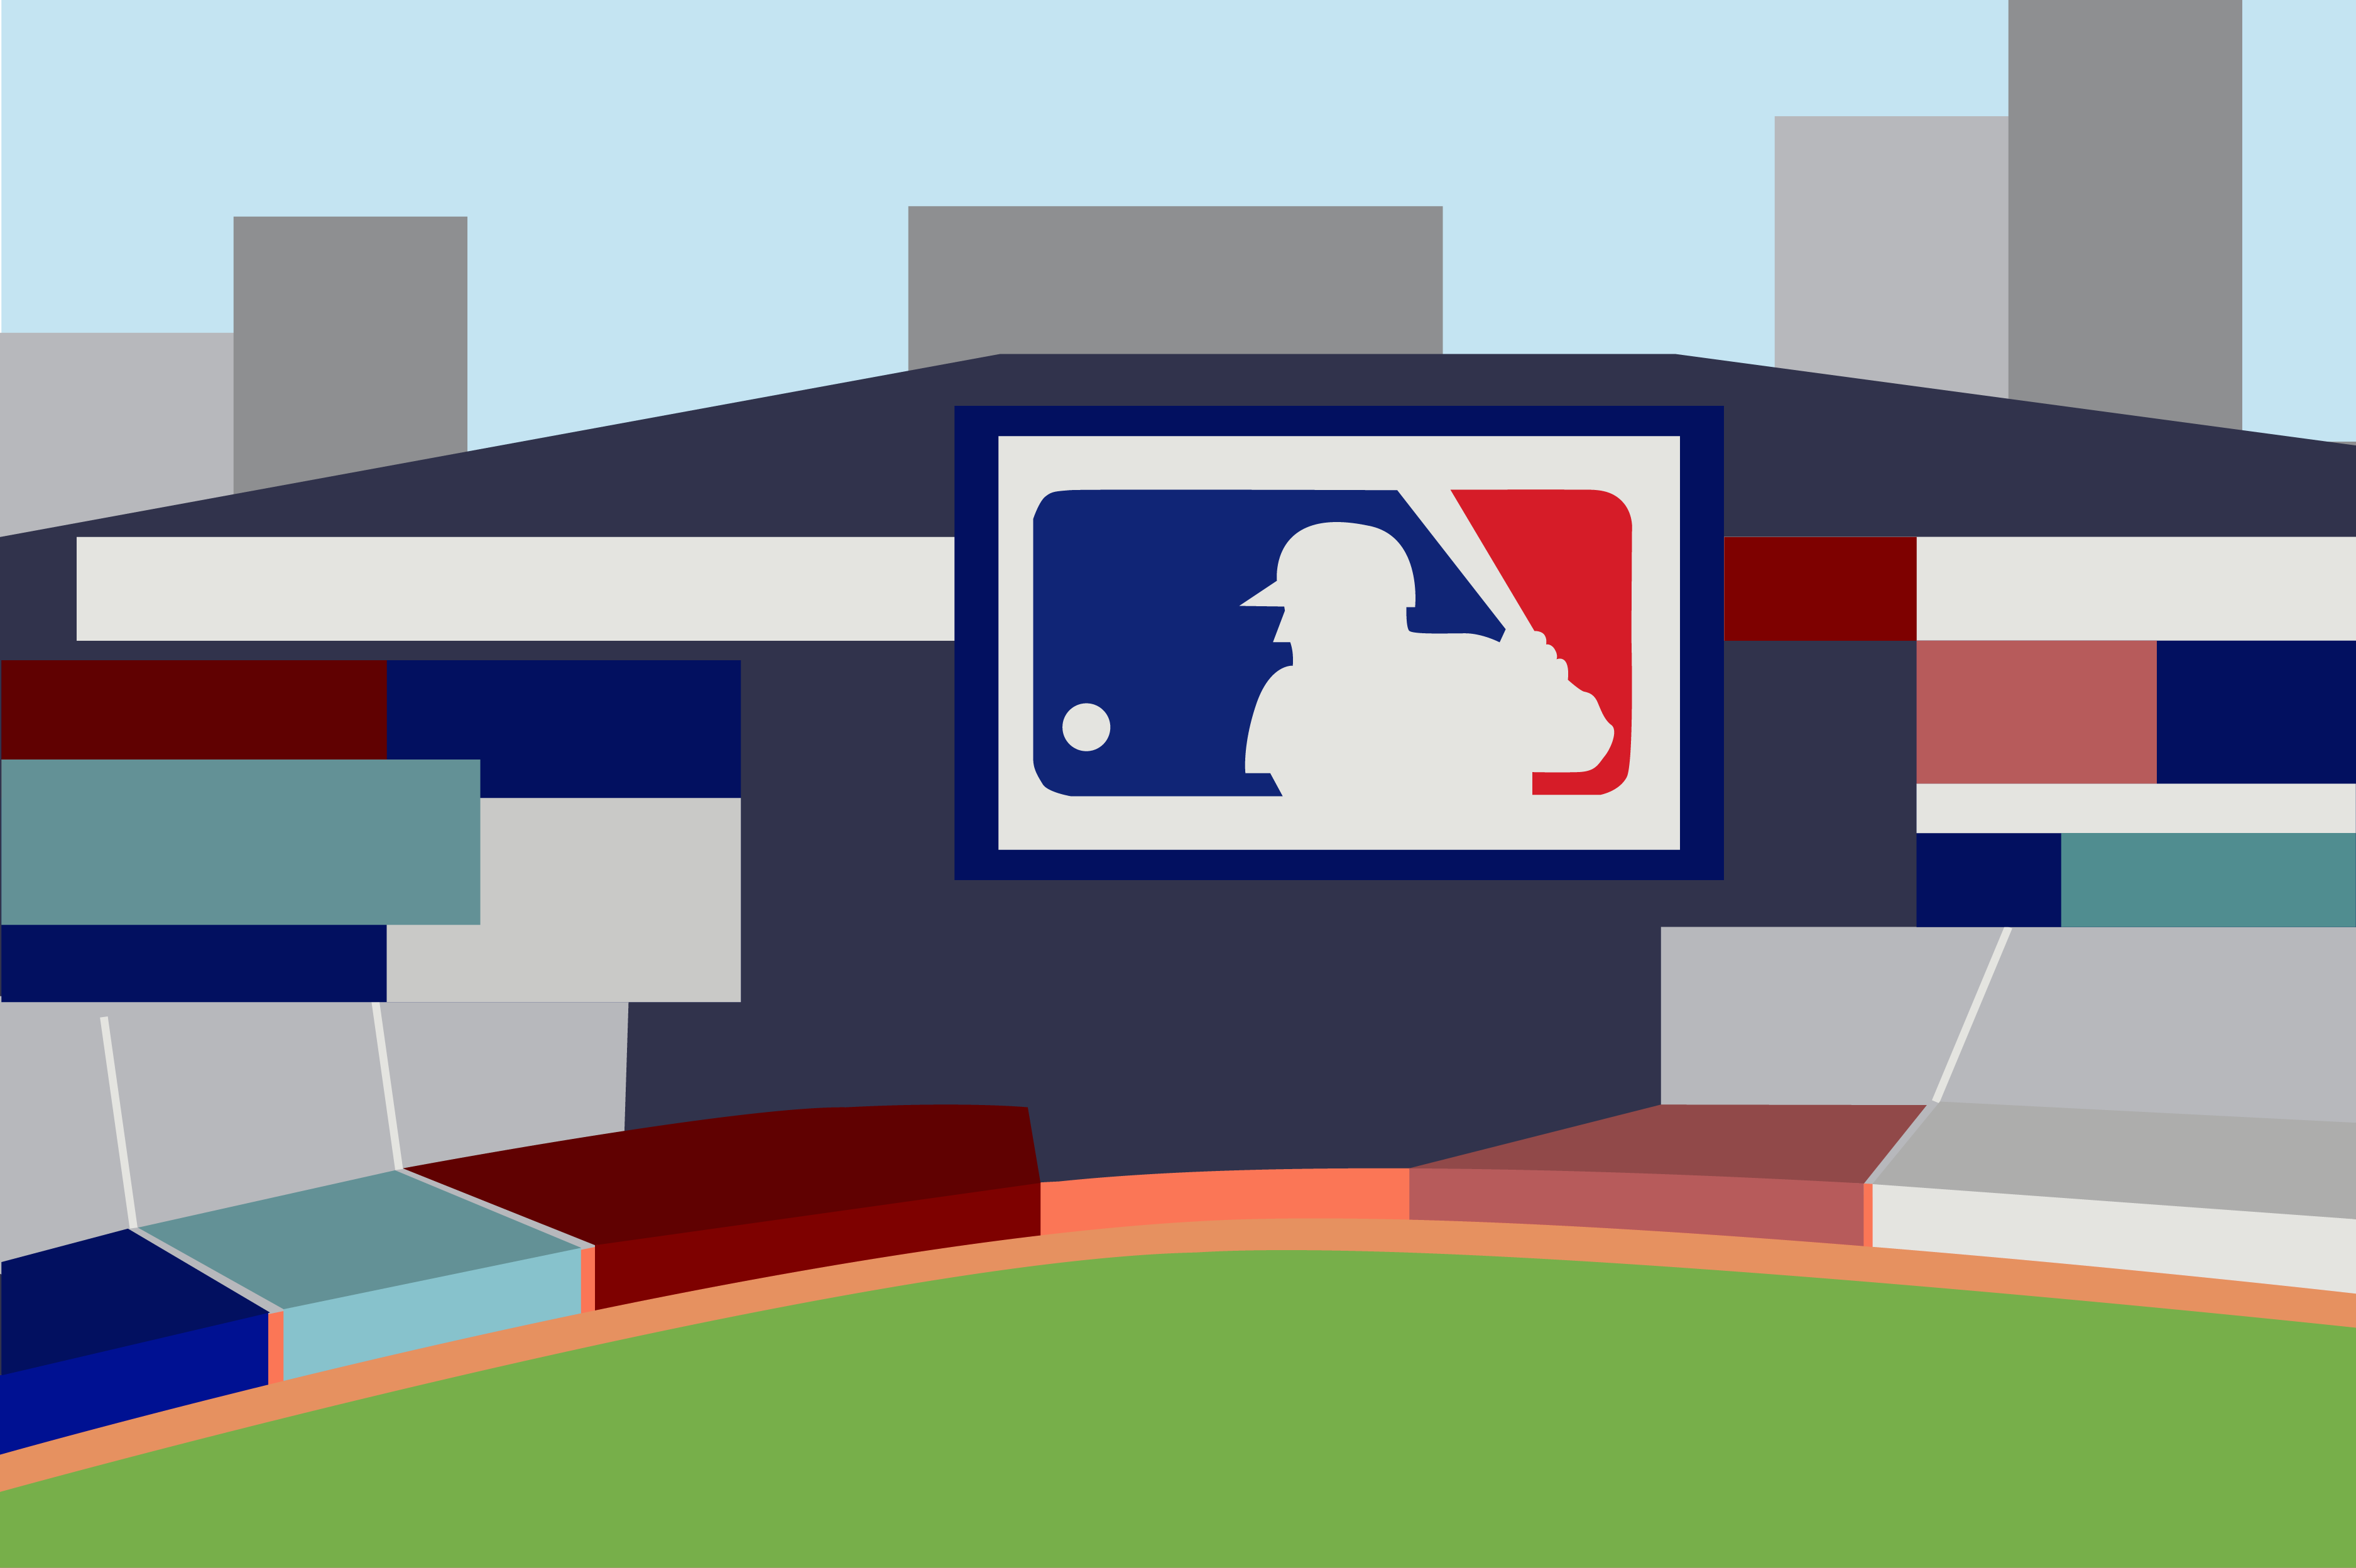 Major League Baseball agrees to pay minor leaguers $185 million to